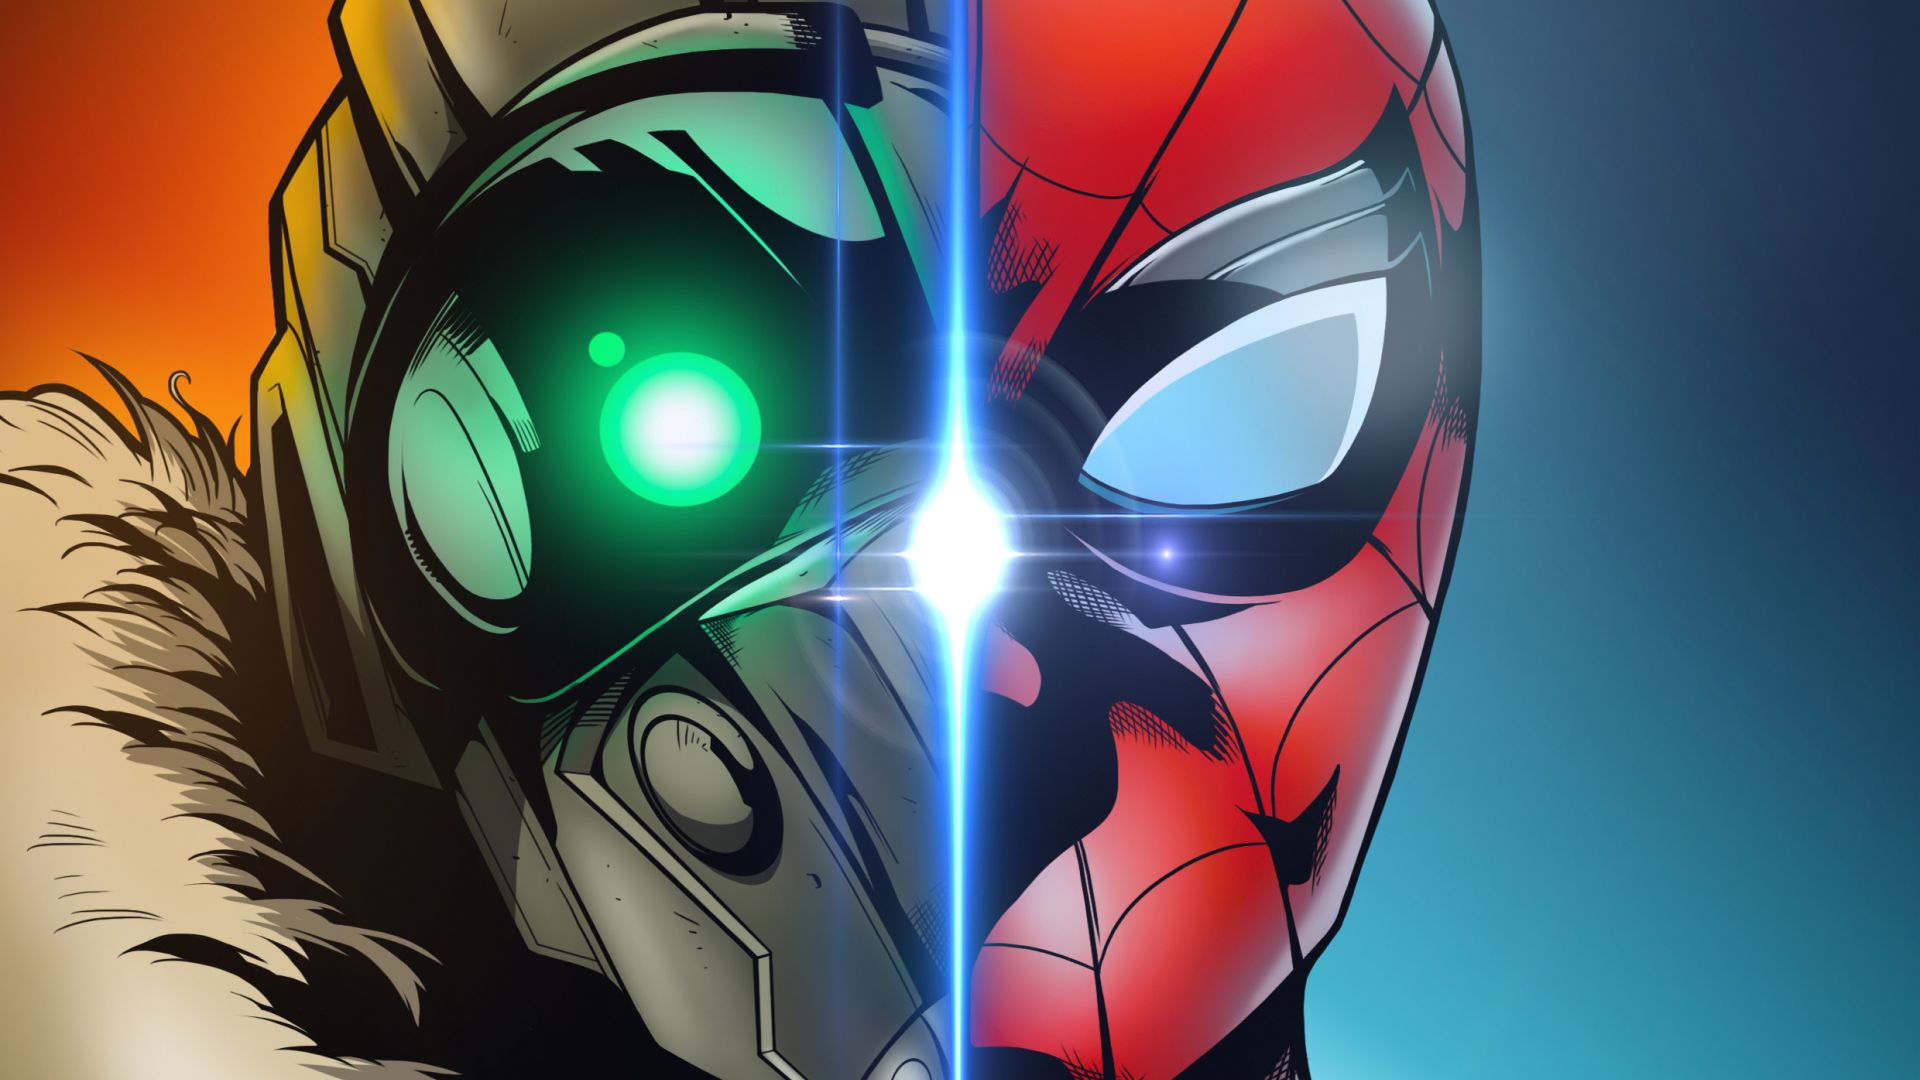 Desktop Wallpaper Spider Man: Homecoming, 2017 Movie, Fan Art, Hd Image,  Picture, Background, 9103c9